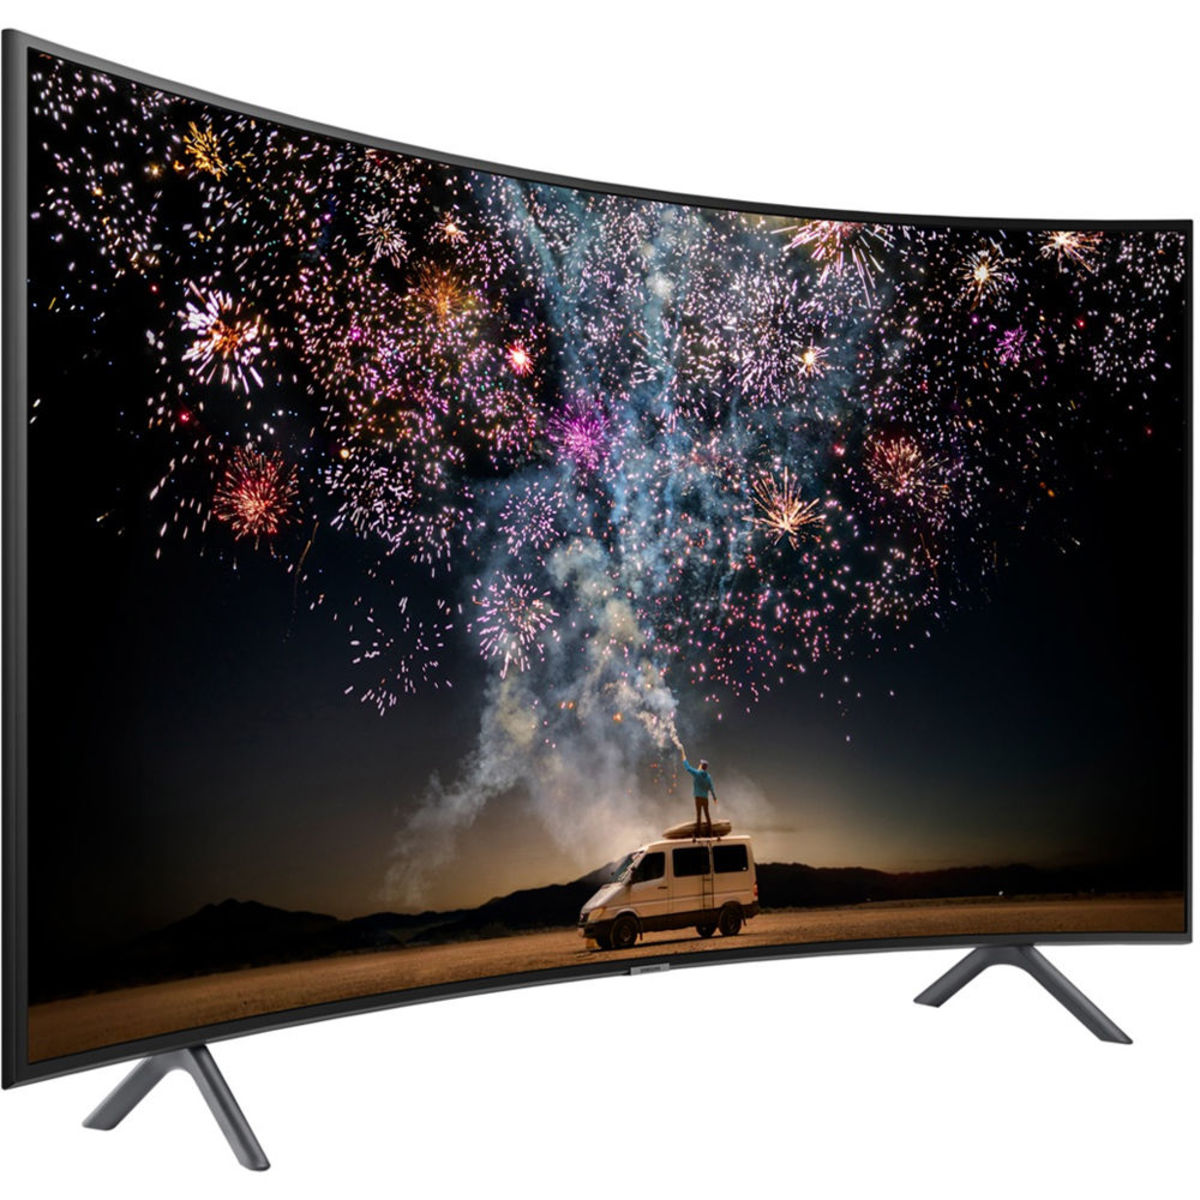 Buy Samsung Curved Ultra HD Smart LED TV 49RU7300 49" Online at Best Price | LED TV | Lulu KSA in Saudi Arabia